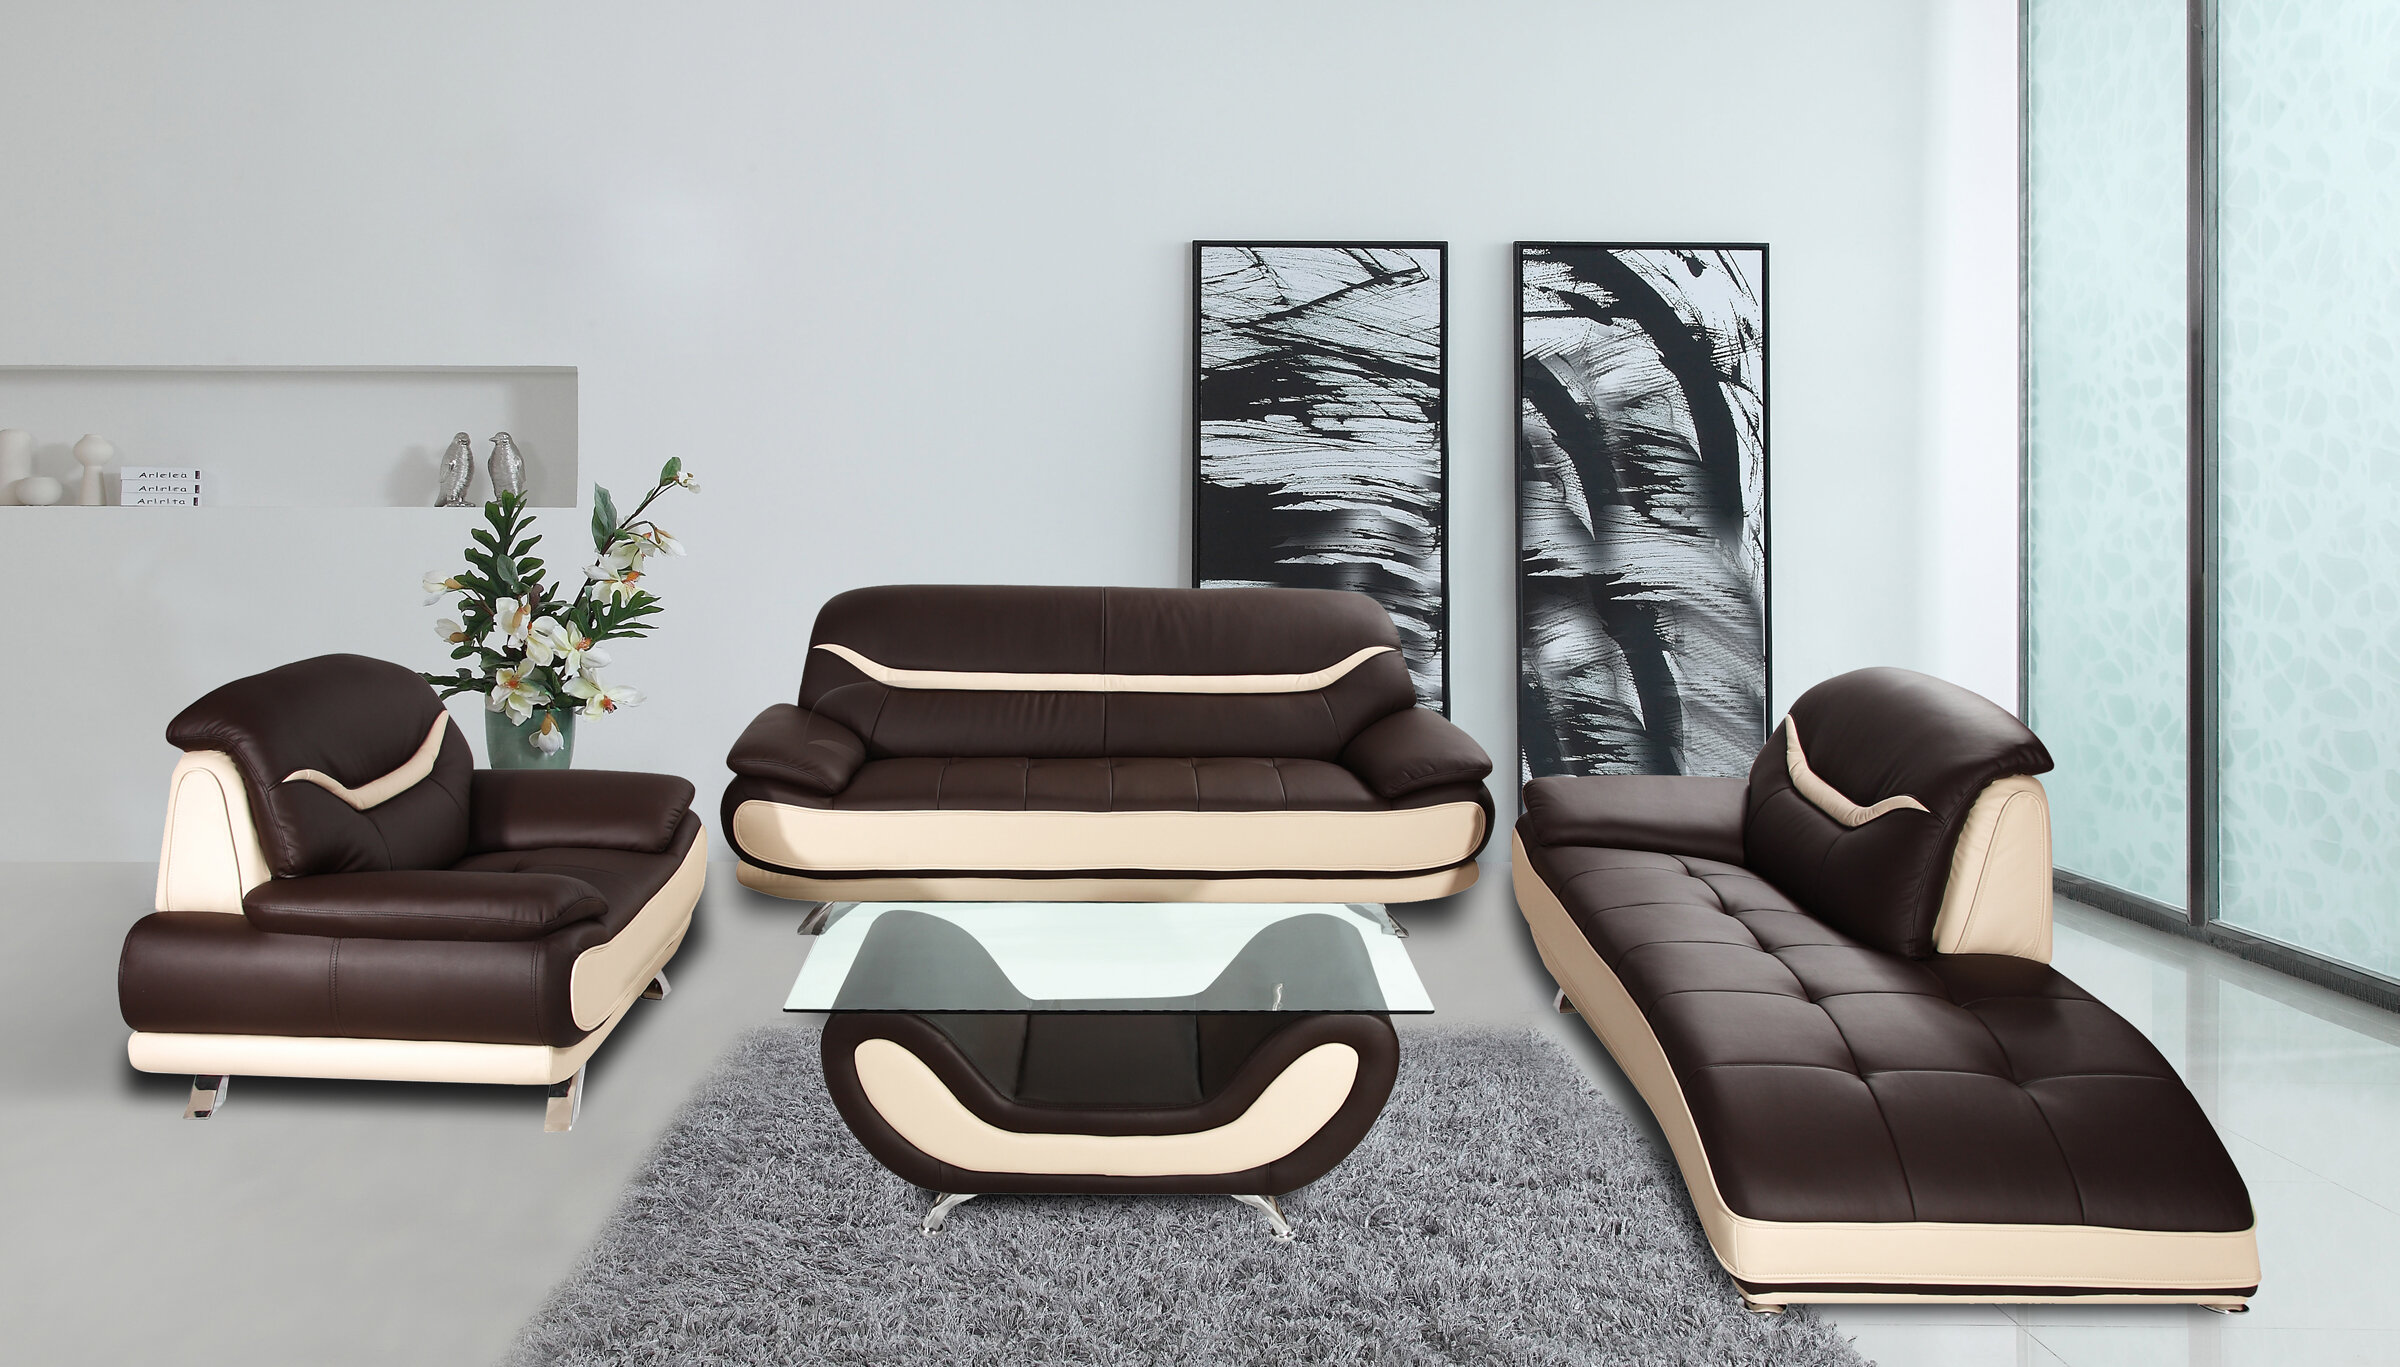 Orren Ellis Mccree 3 Piece Leather Living Room Set Reviews Wayfair